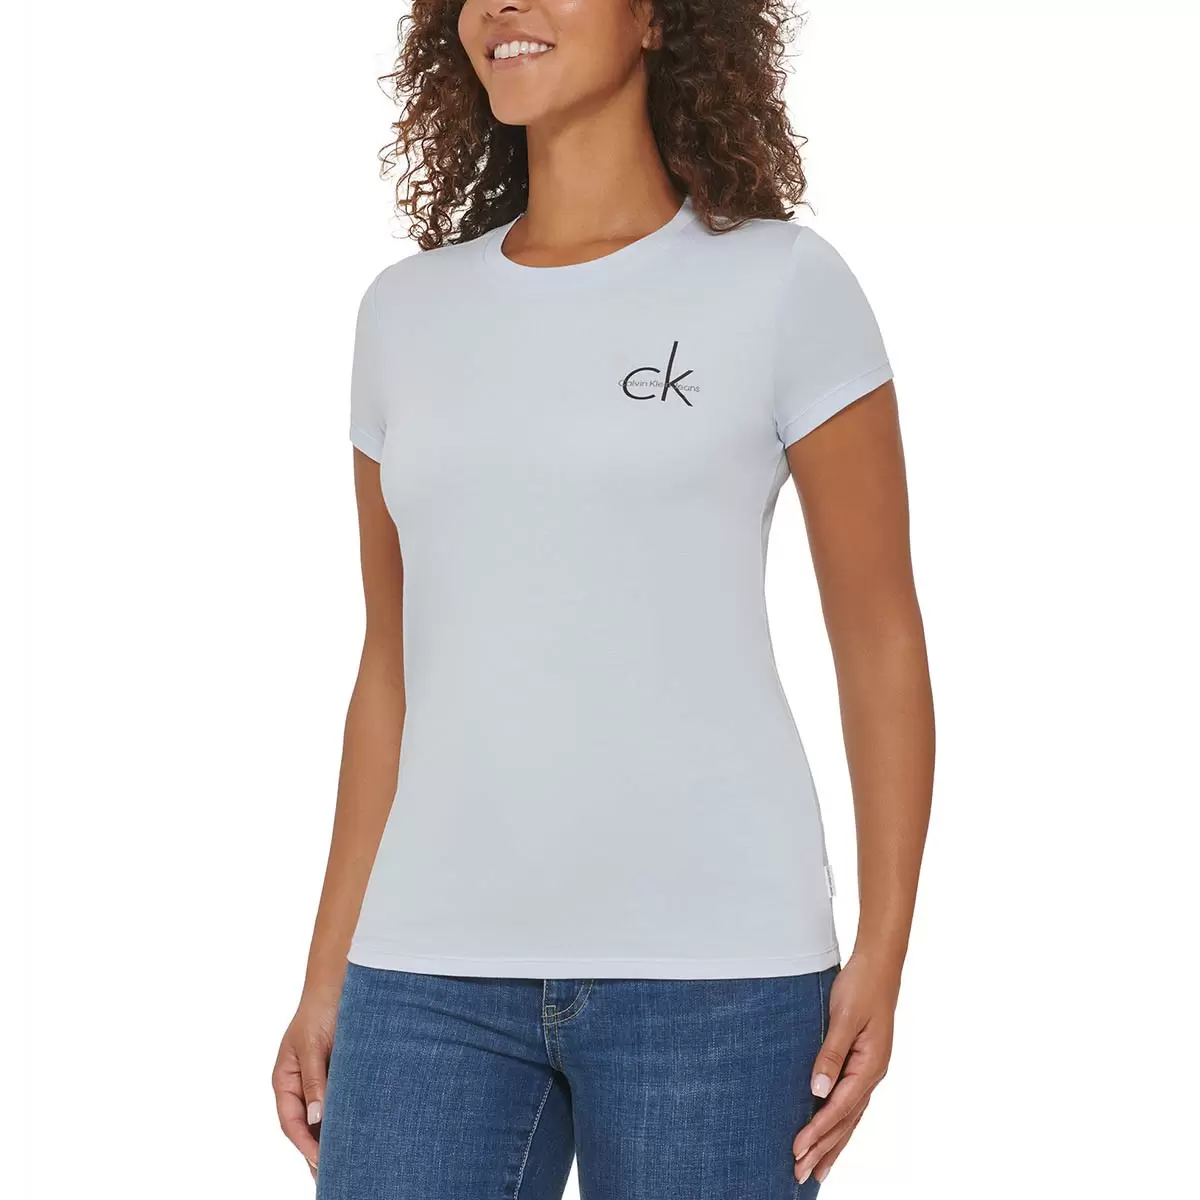 Calvin Klein Jeans カルバンクライン ジーンズ  レディース ロゴ 半袖Tシャツ